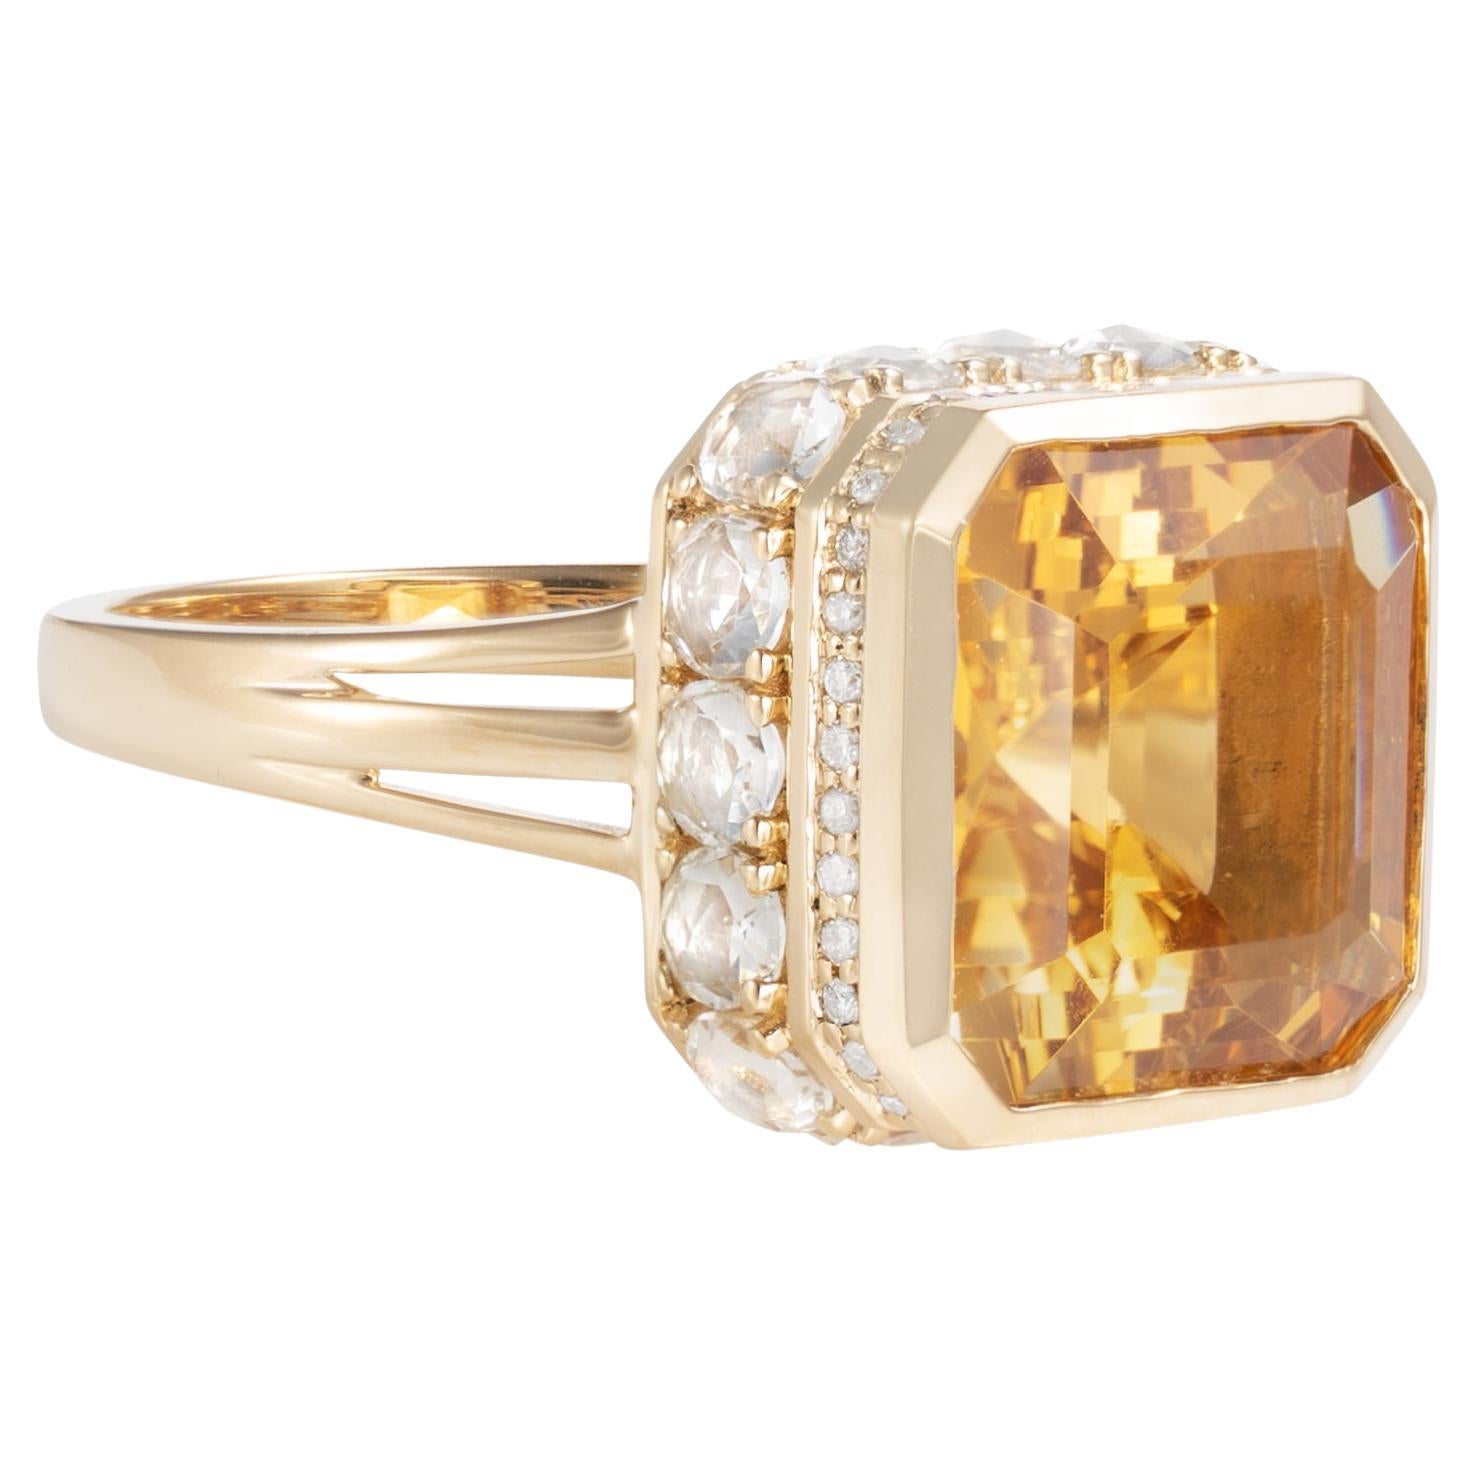 Art Deco Citrine Ring with White Topaz & Diamond in 18 Karat Yellow Gold